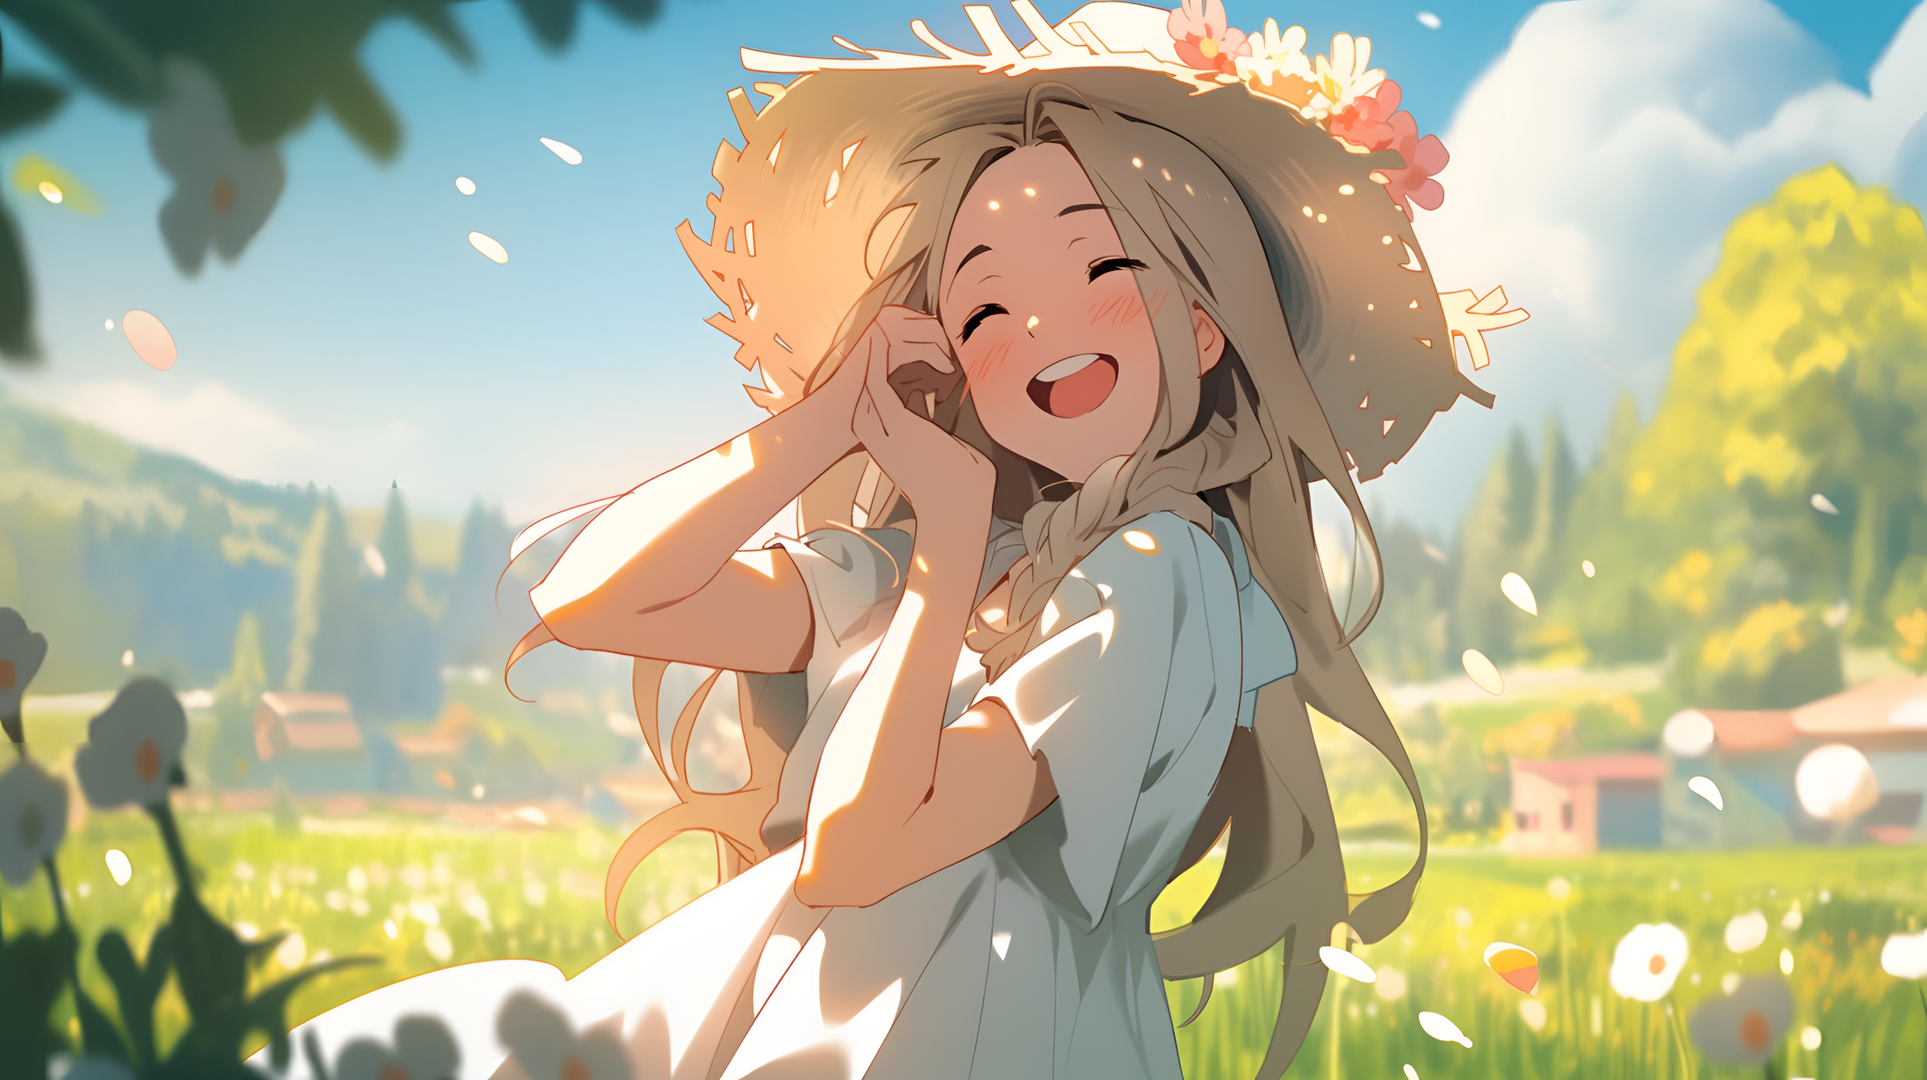 Smiling Anime Girl Closed Eyes Icon: Vector có sẵn (miễn phí bản quyền)  1905288145 | Shutterstock